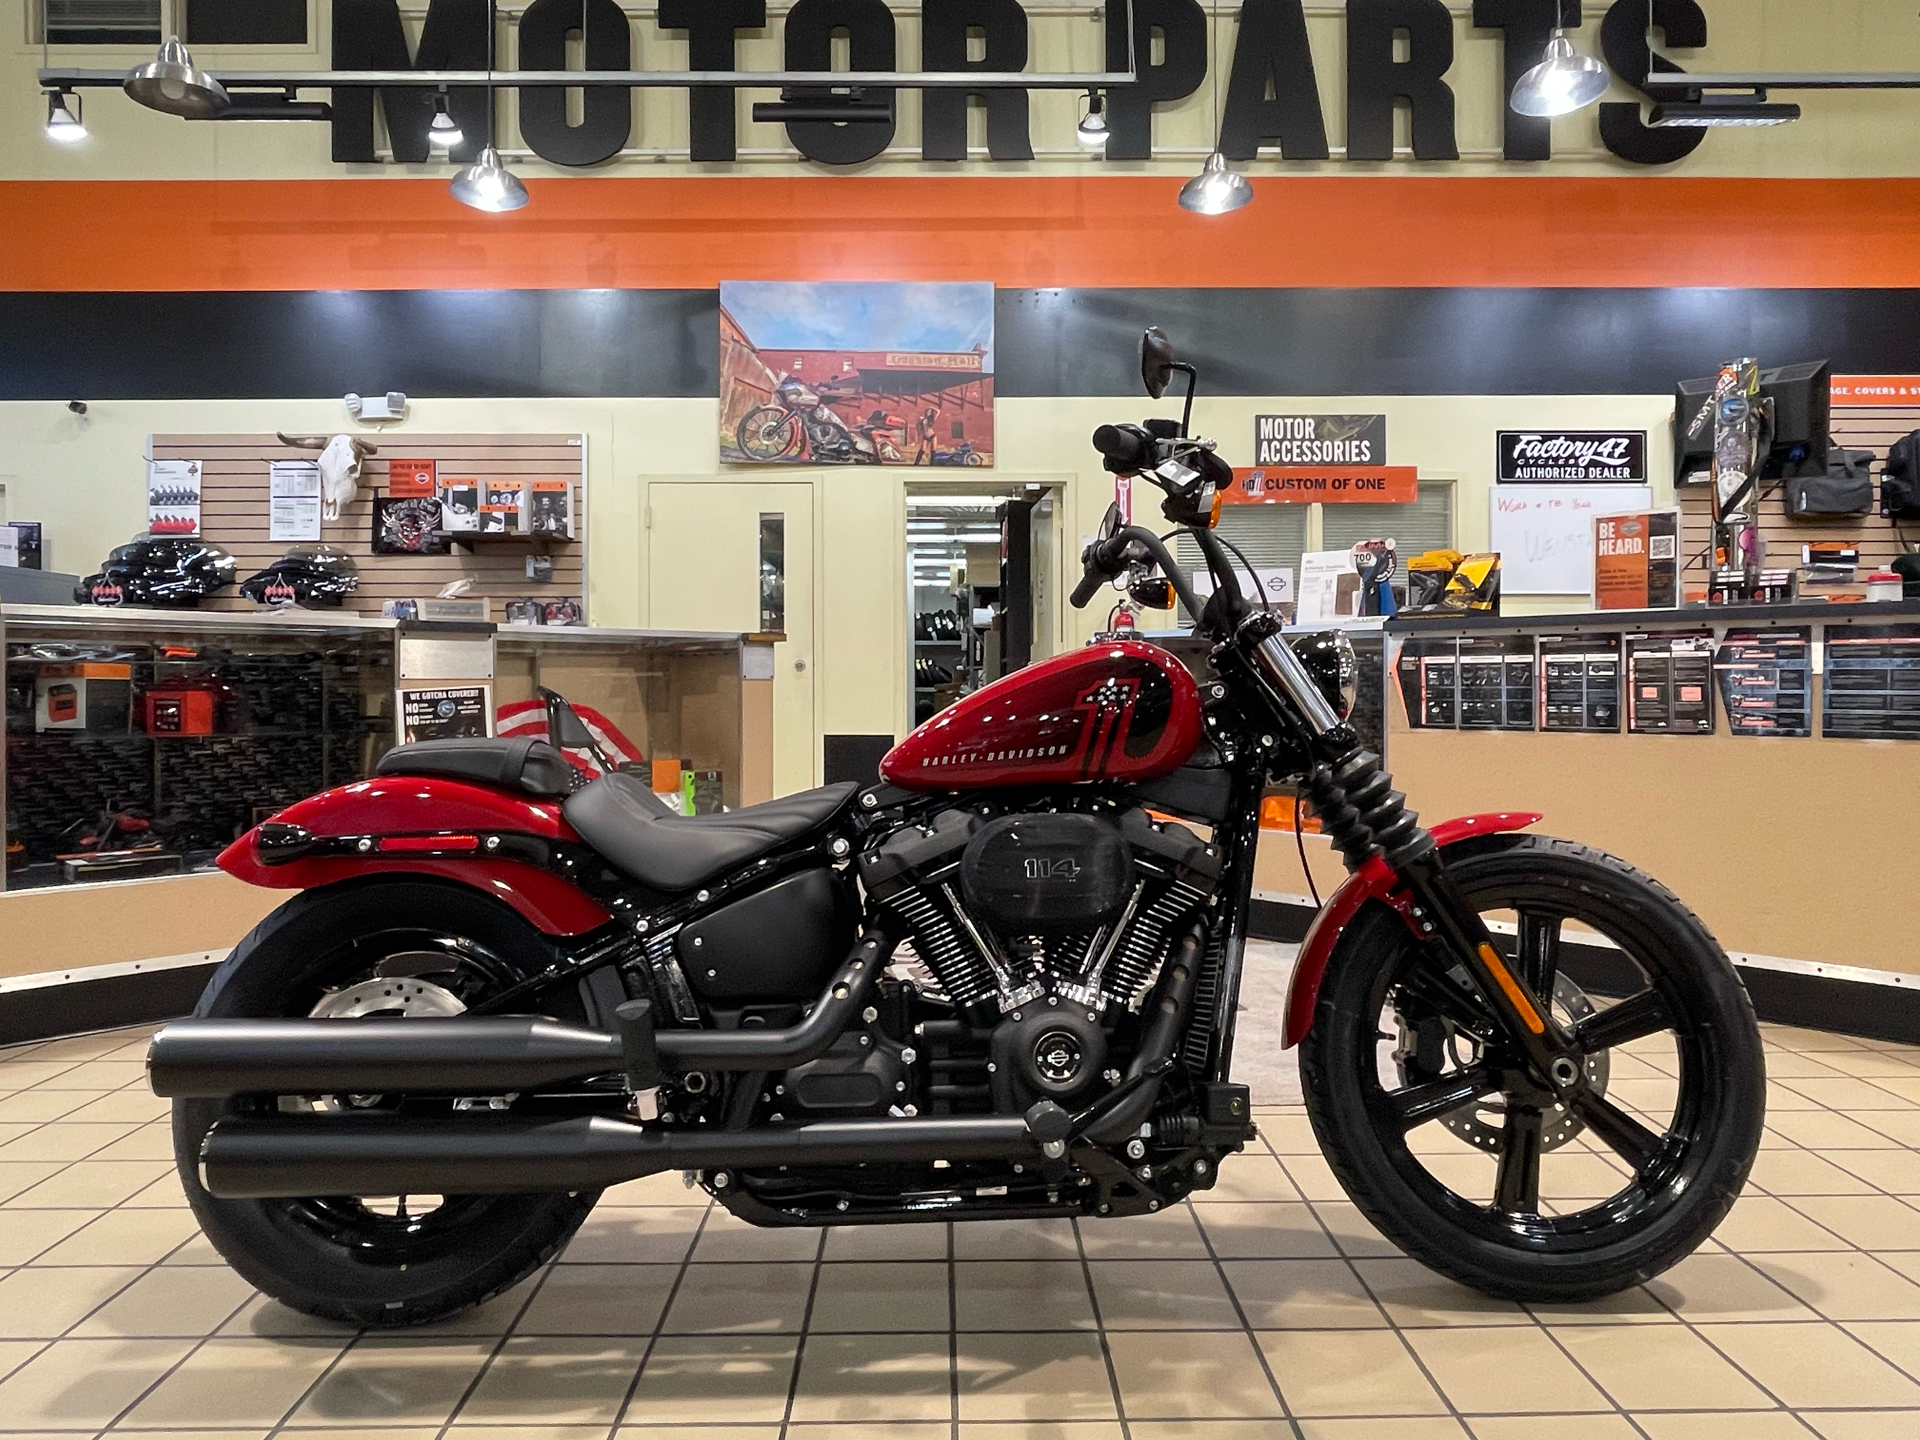 2022 Harley-Davidson Street Bob® 114 in Dumfries, Virginia - Photo 1